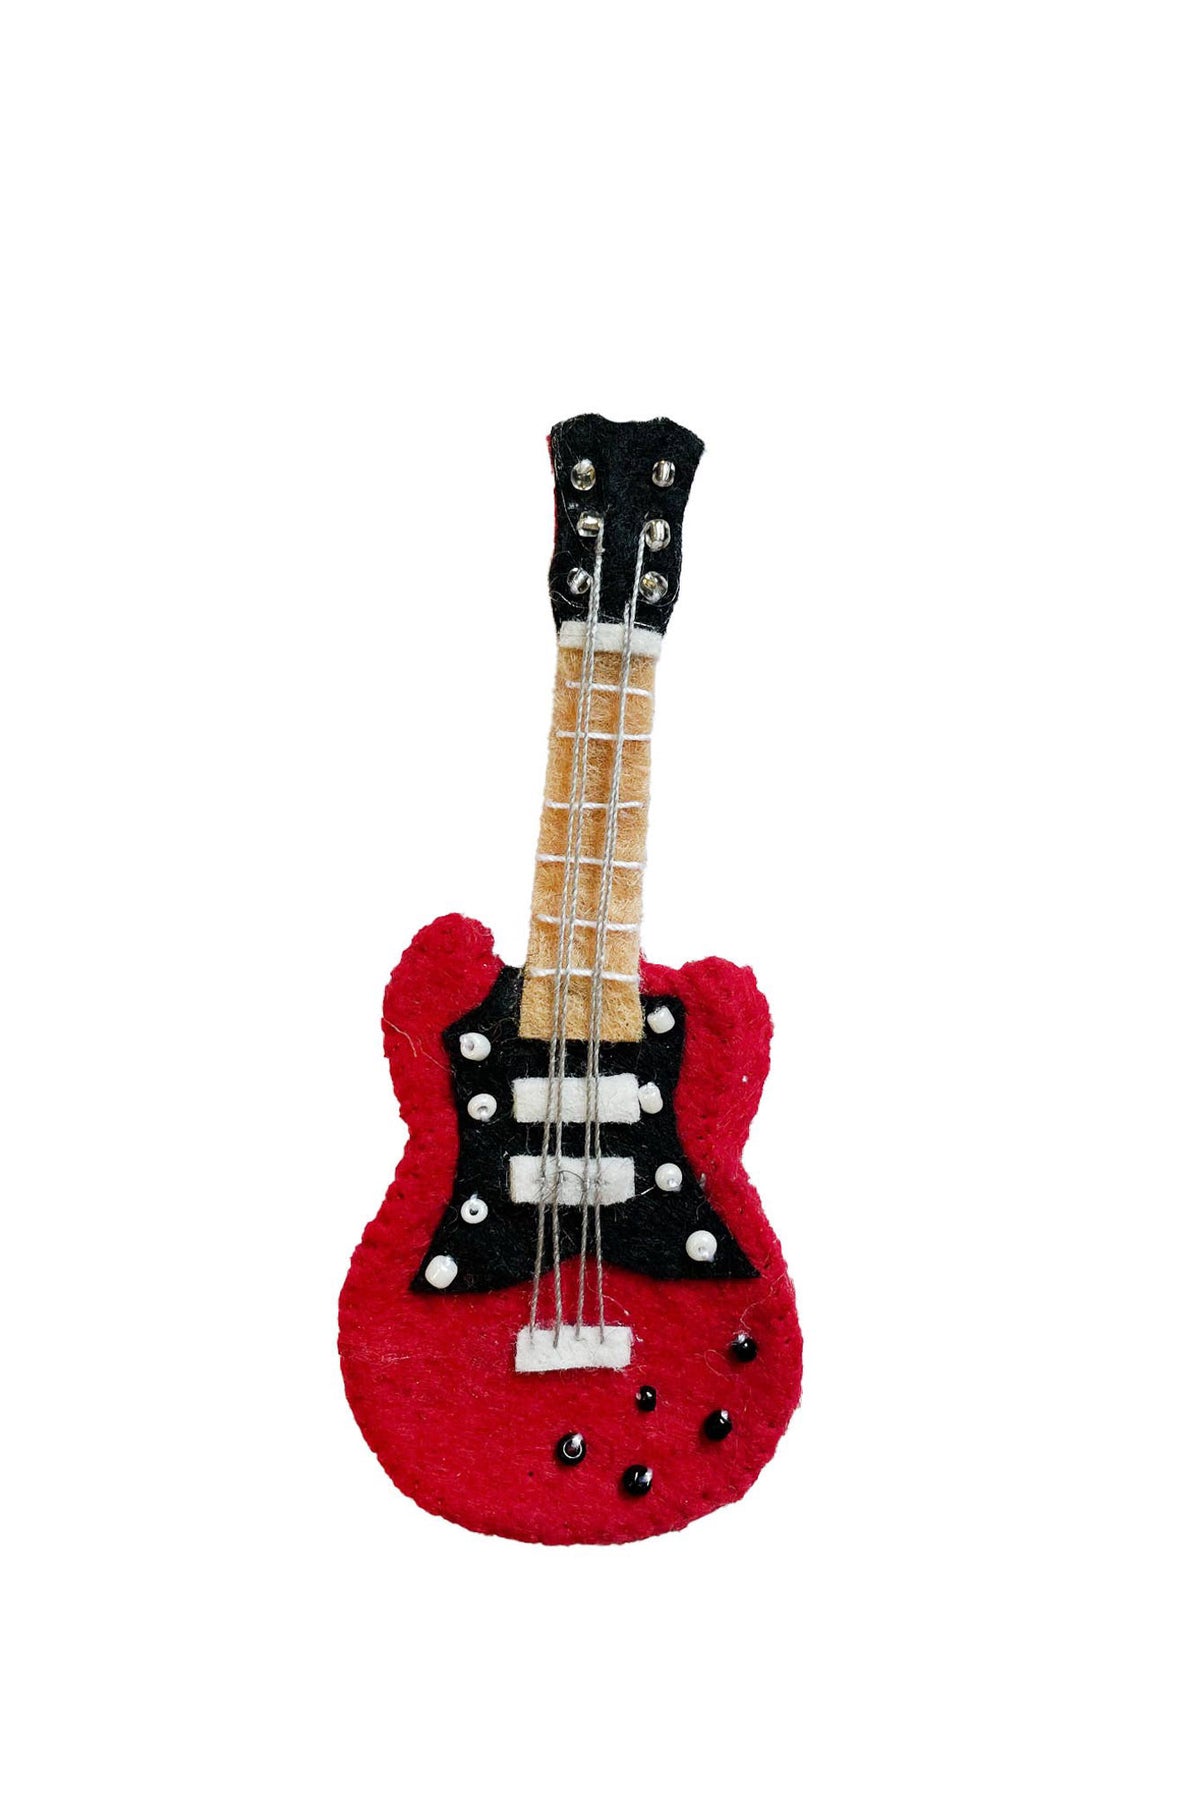 Silk Road Bazaar Red Electric Guitar Ornament